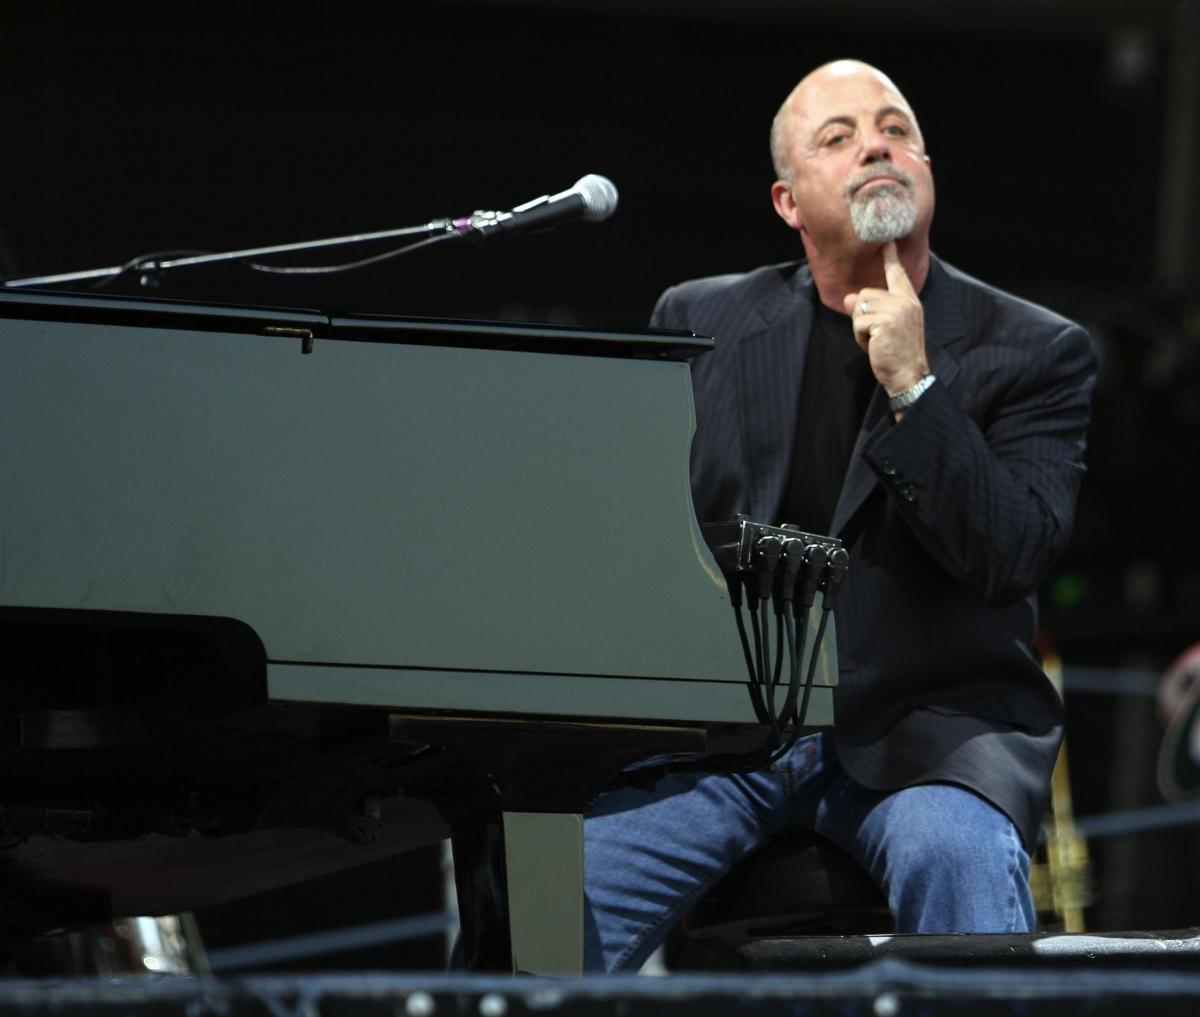 Past concerts at Rose Bowl - Billy Joel